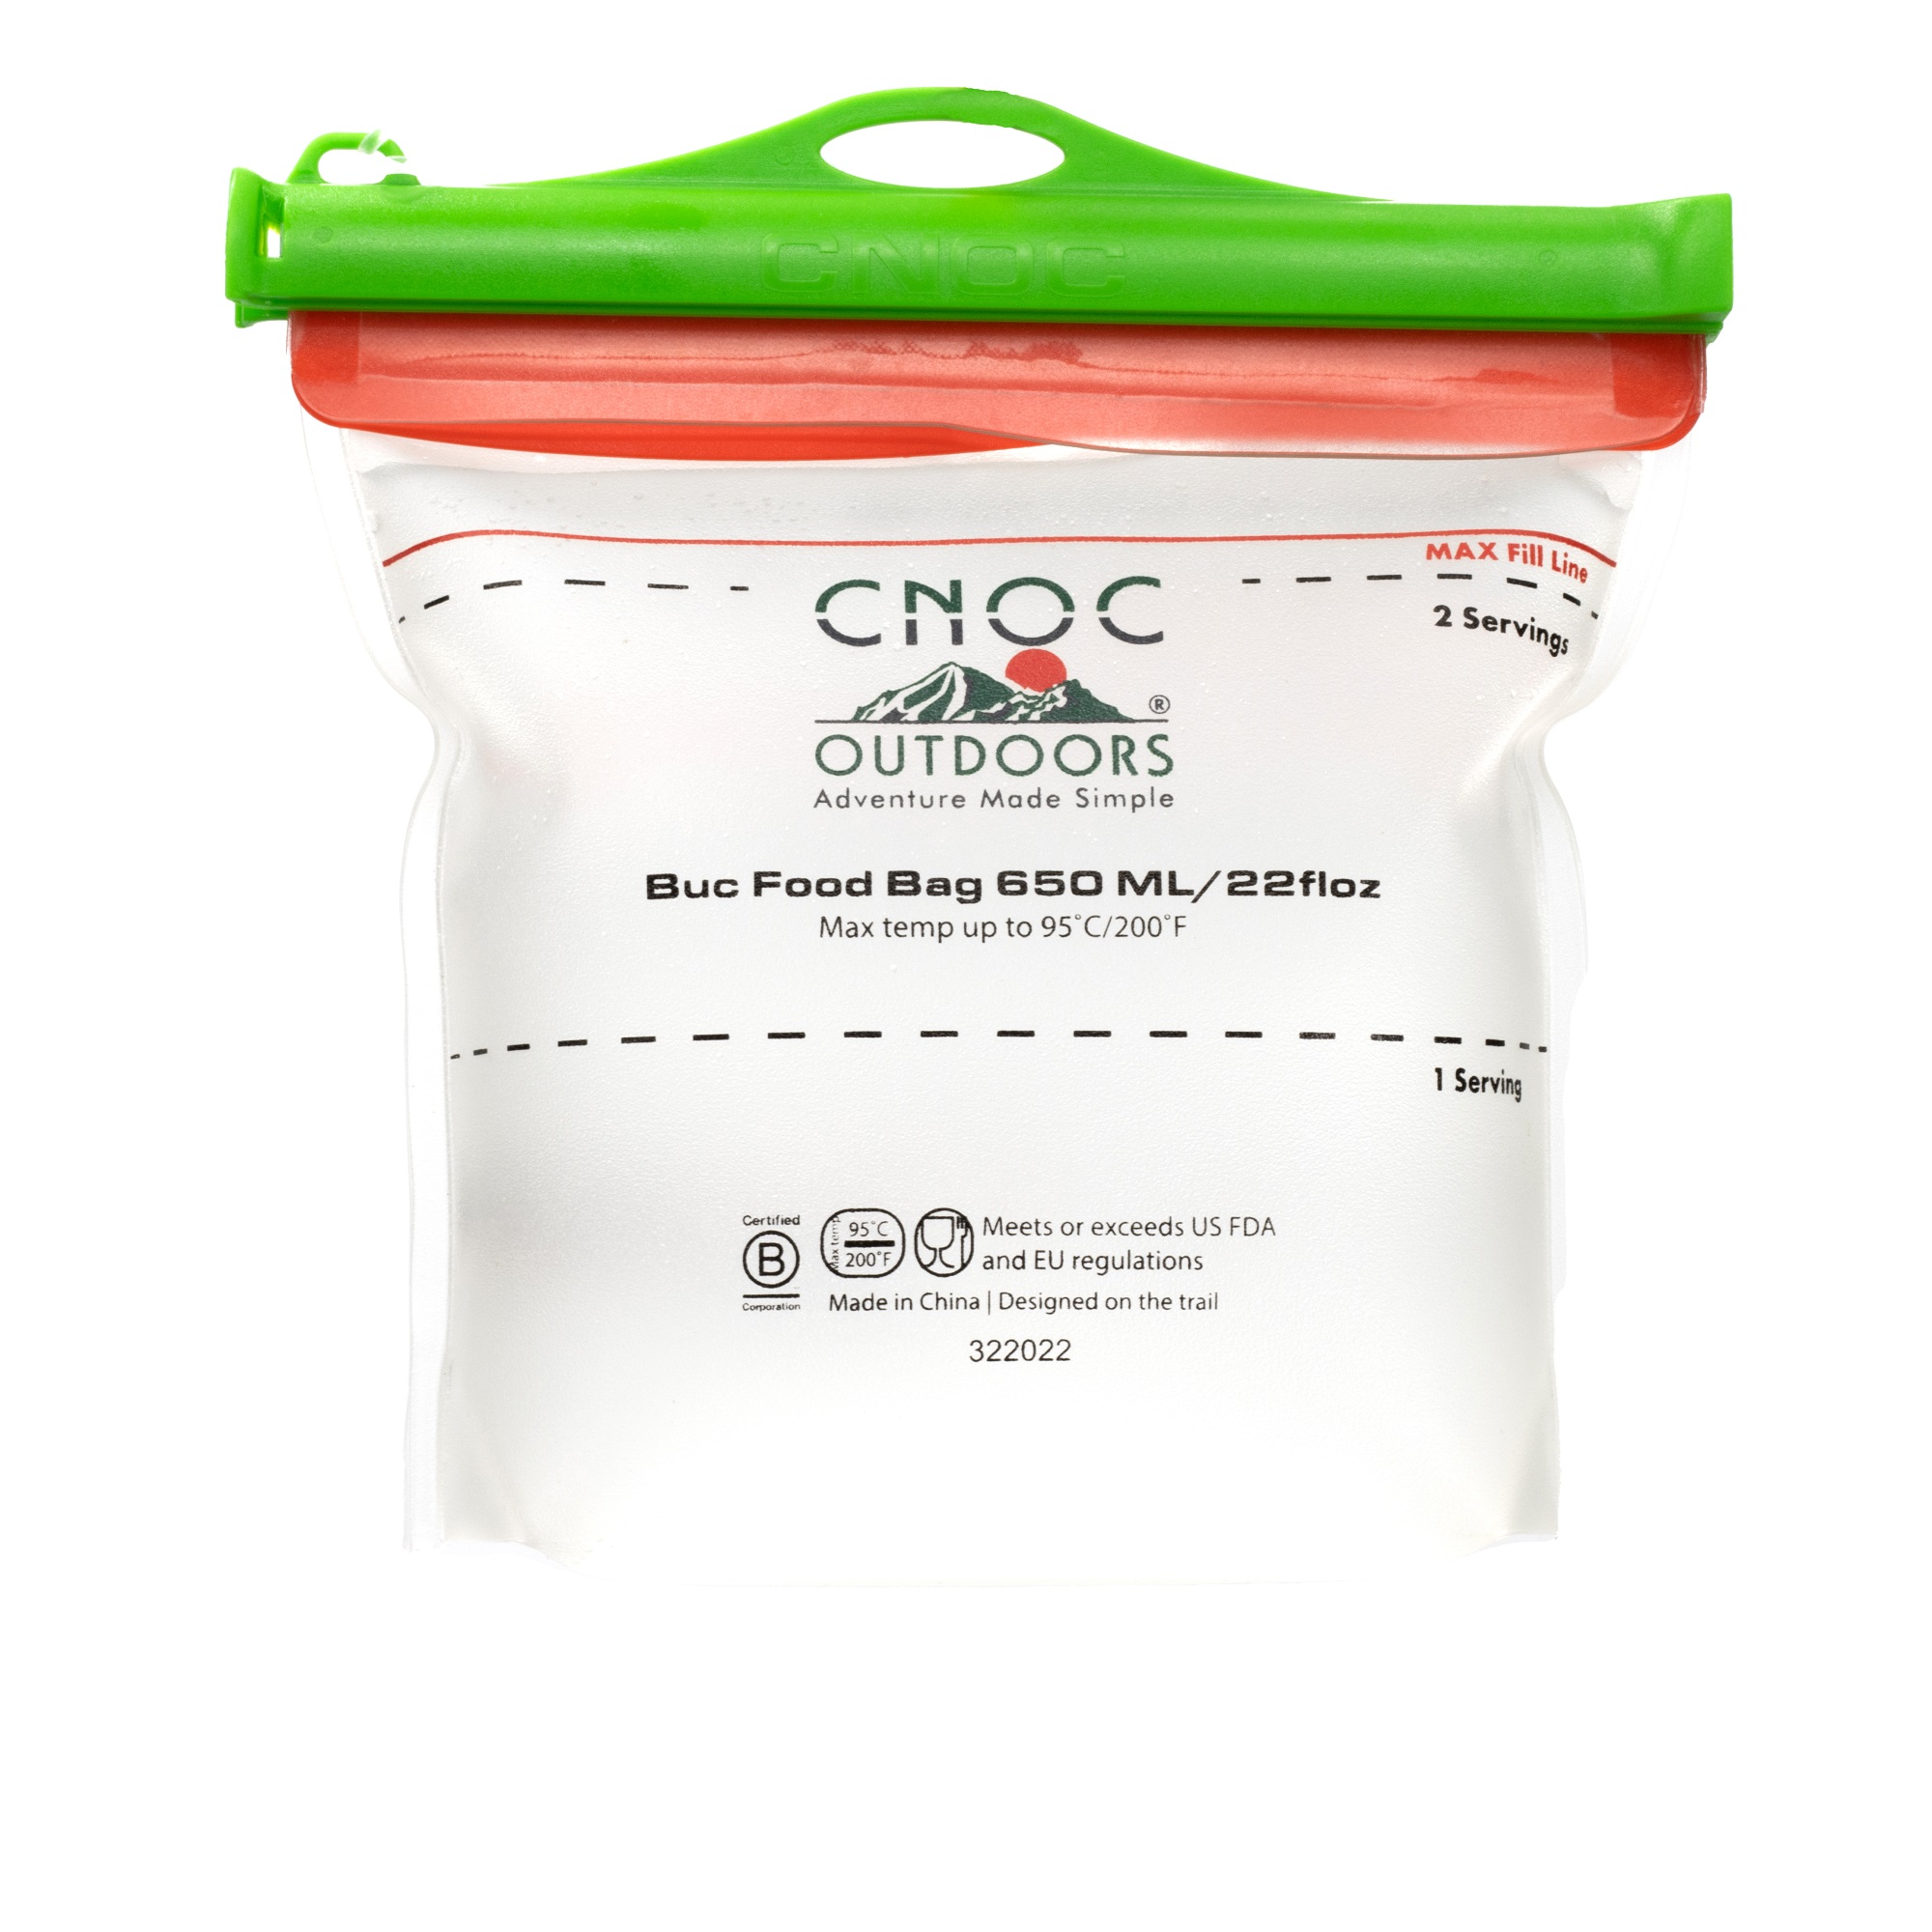 CNOC Buc Food Bag